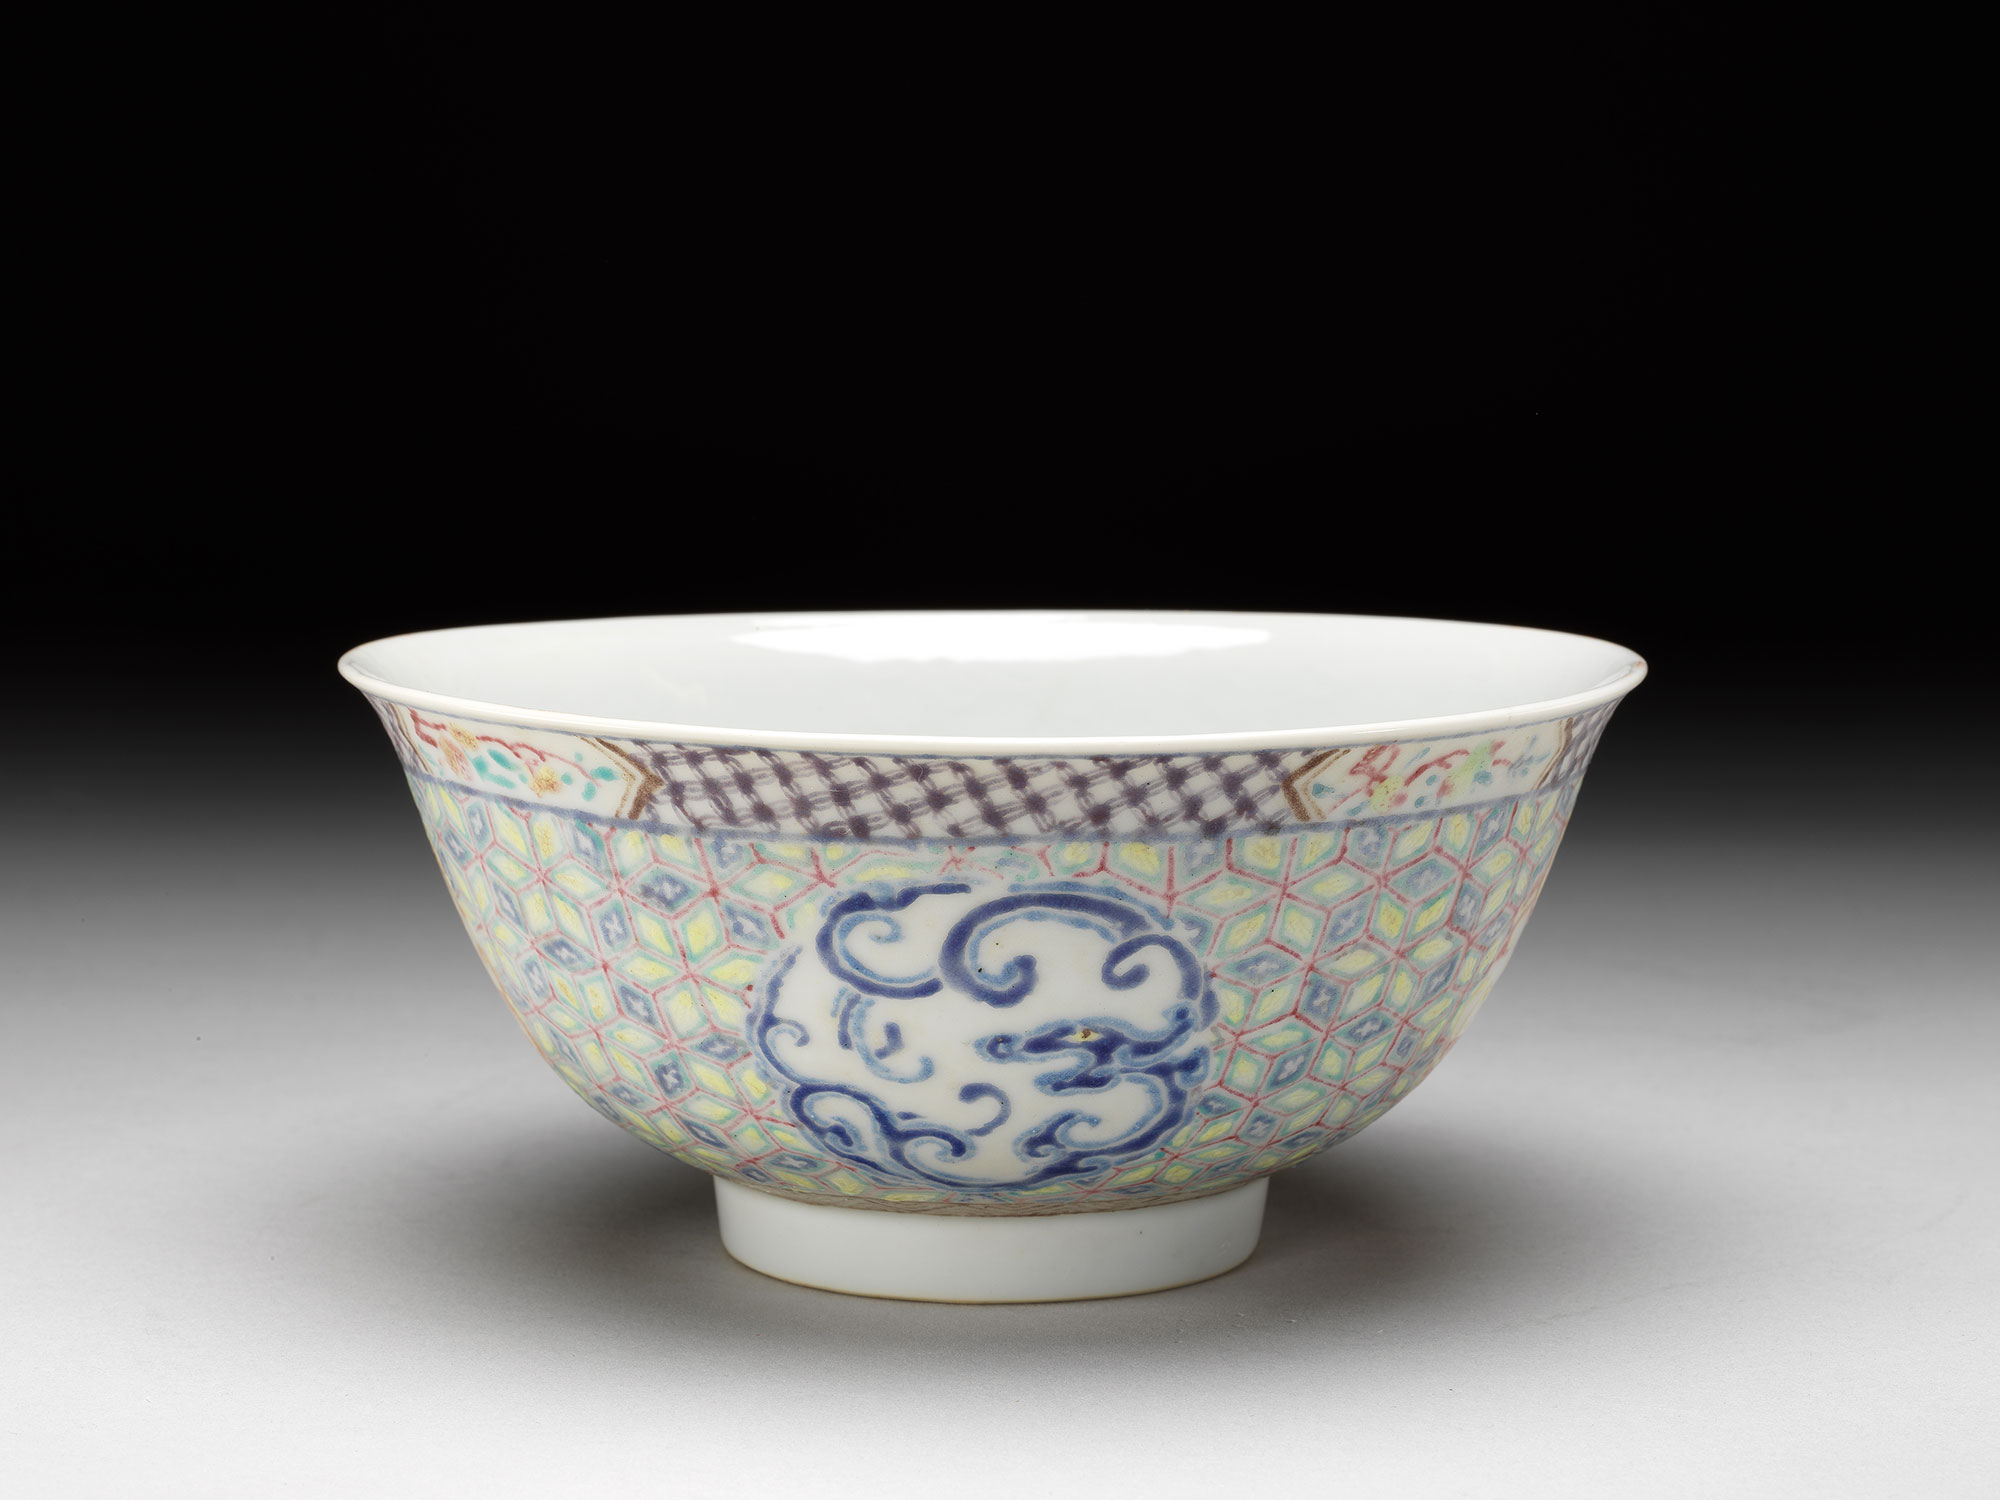 Bowl with coiled chi dragon and cubic patterns Mark of da ming hongzhi nian zhi